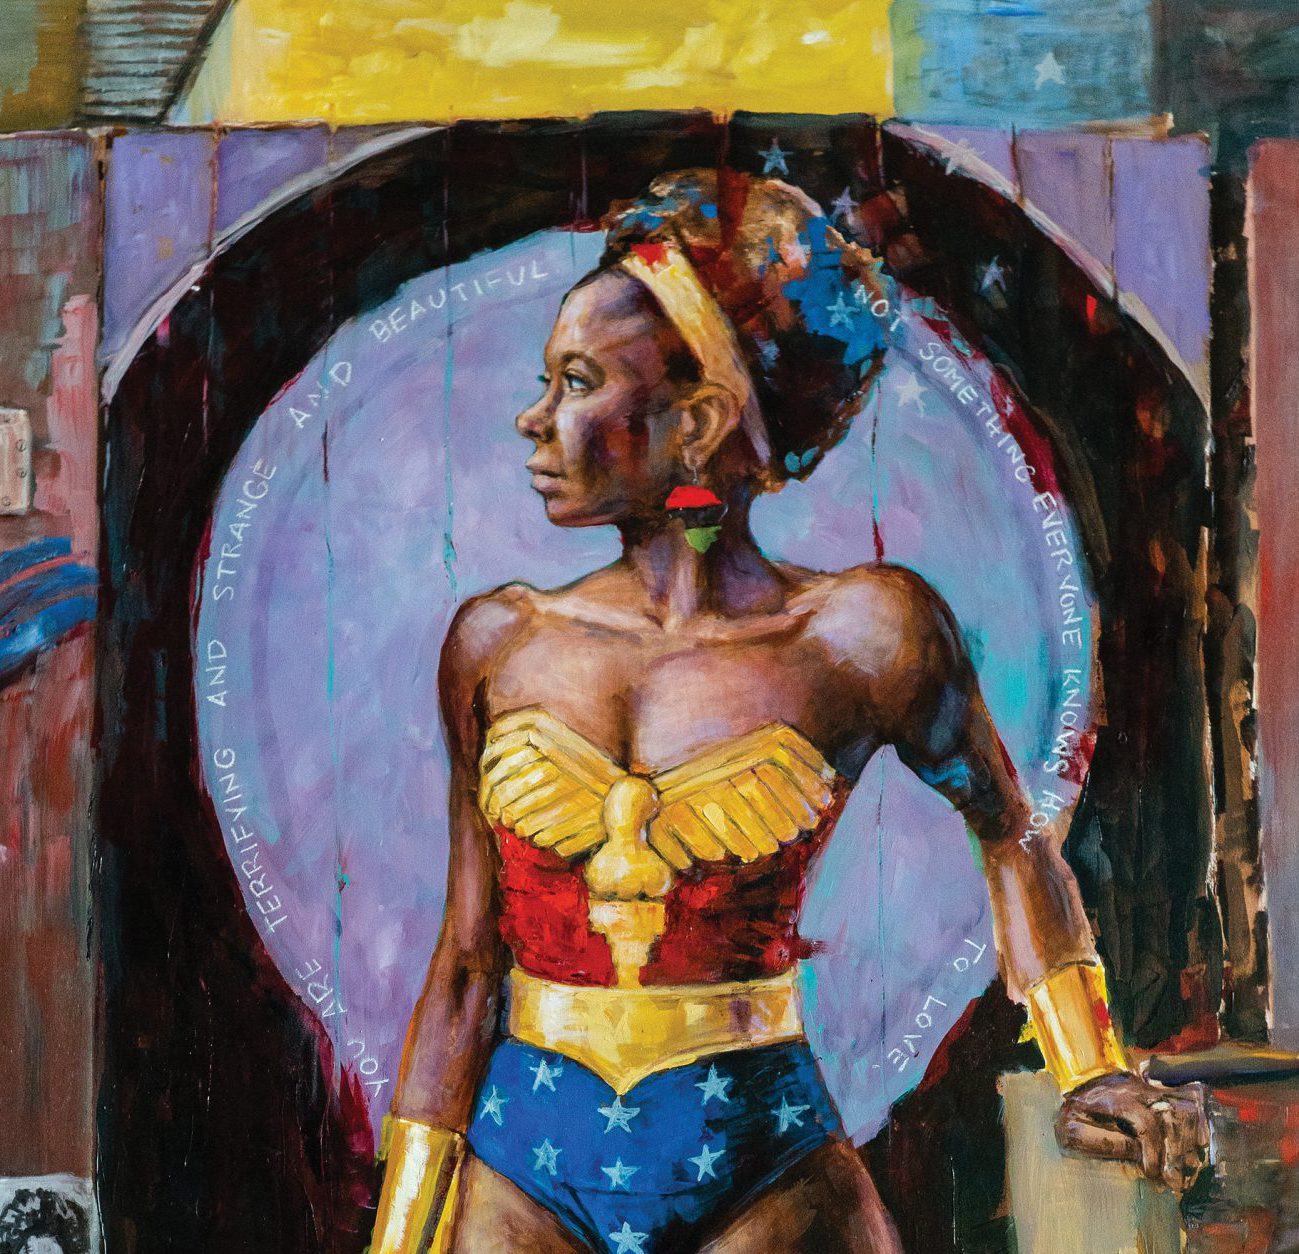 Painting of Wonder Woman by Matthew Bennett